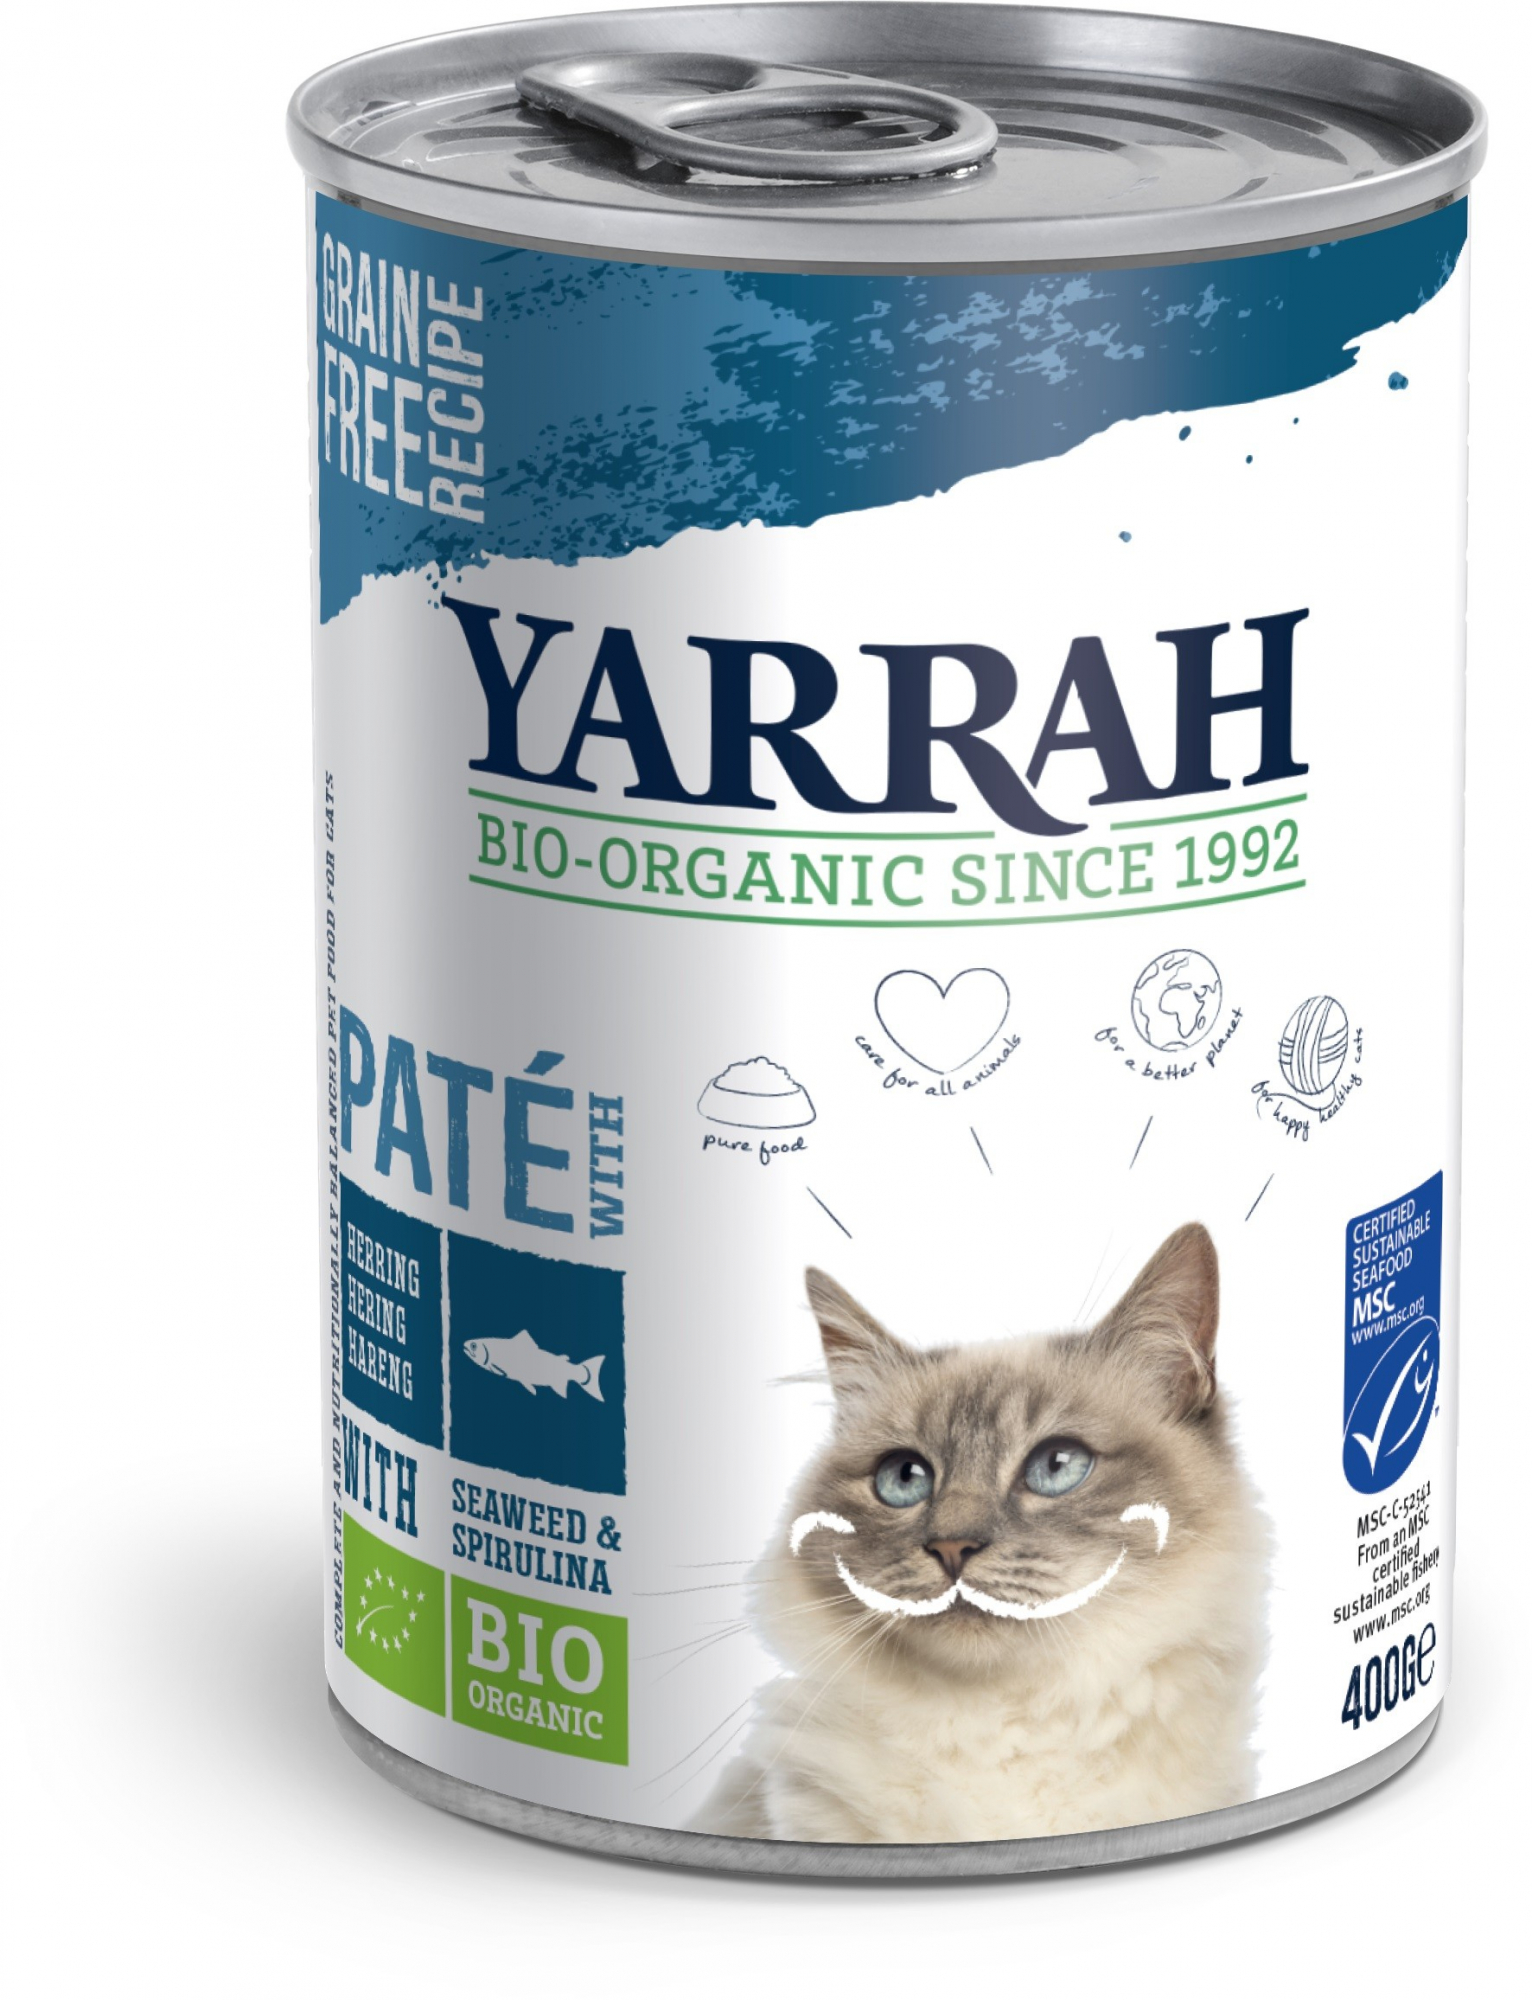 PatêYarrah Bio 400g Sem cereais para Gato adulto - 2 sabores á escolha